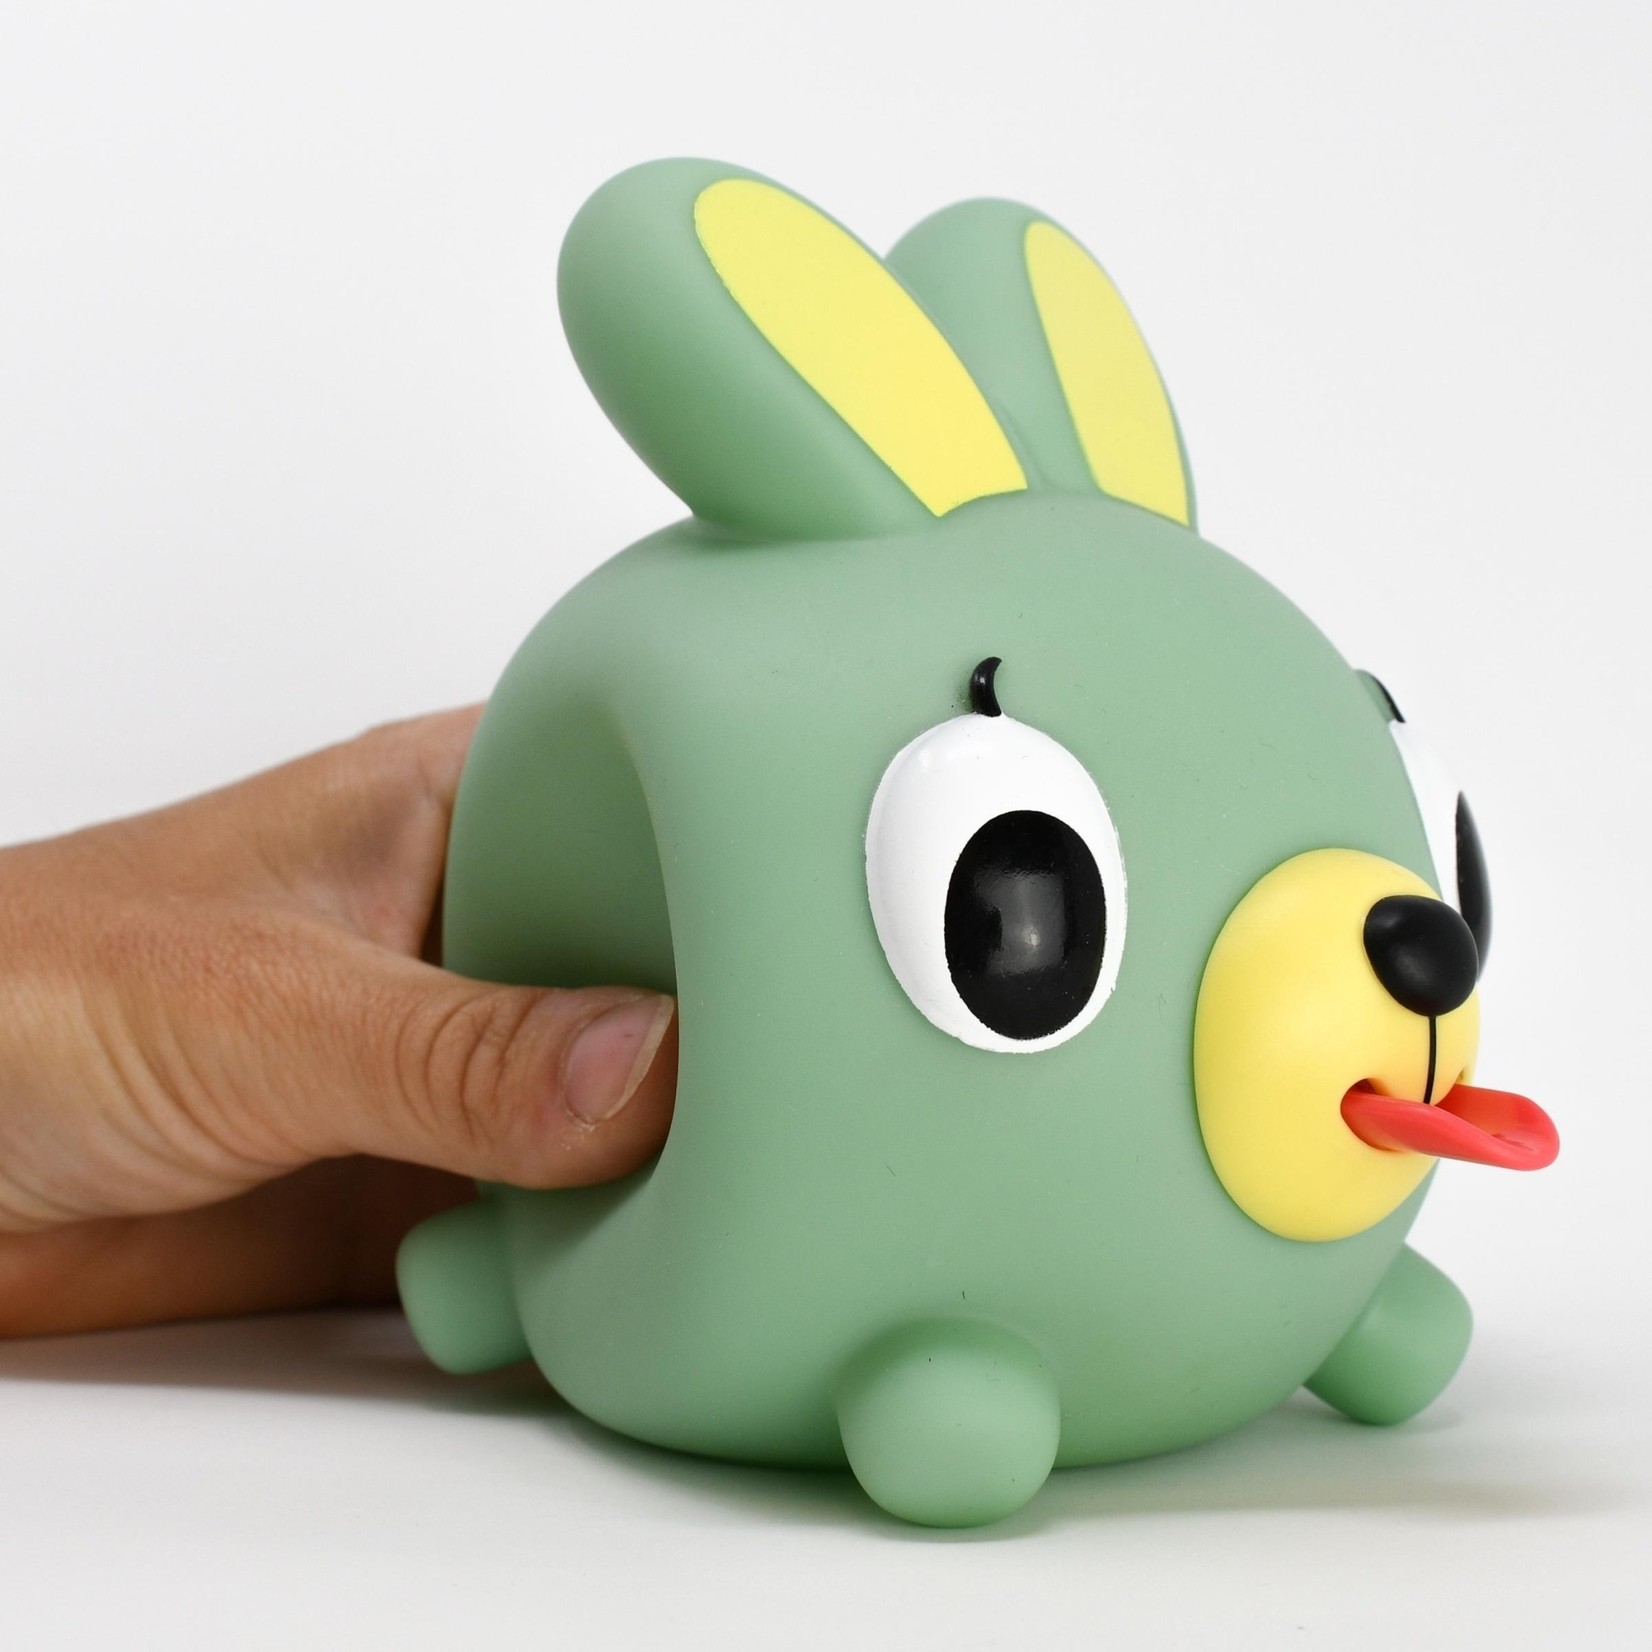 Sankyo Toys/JabberBall Jabber Ball Green Bunny